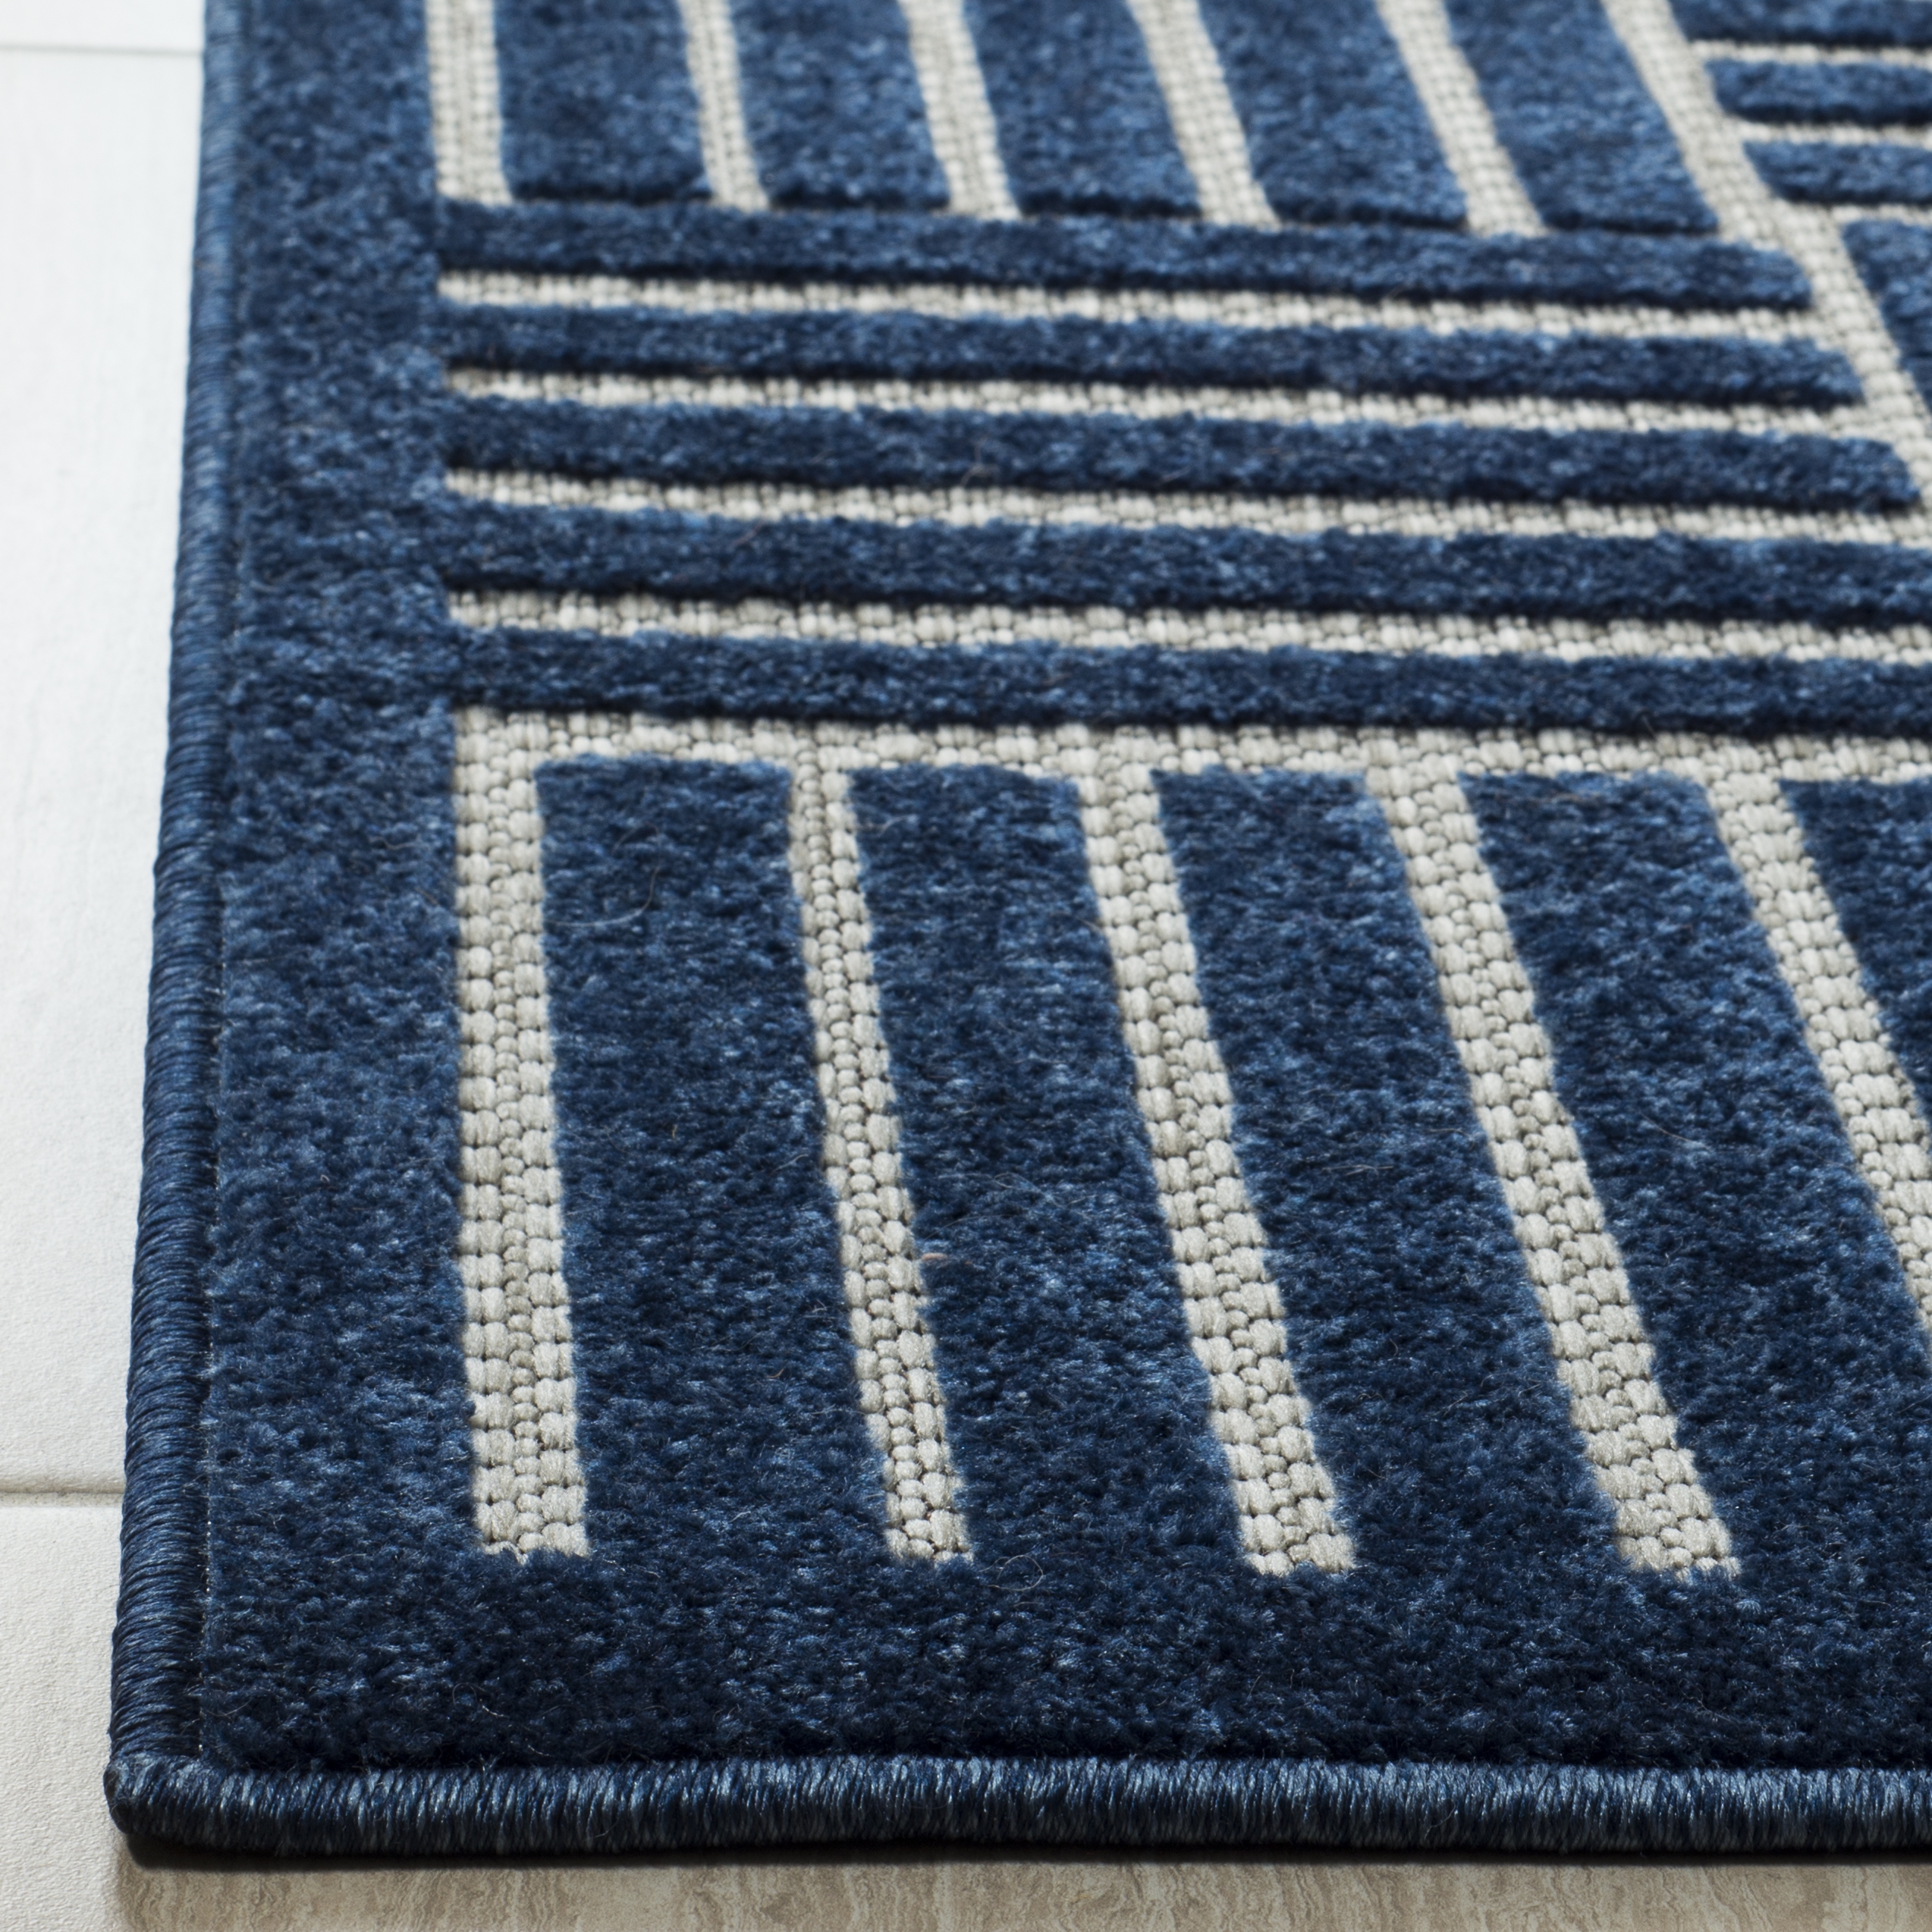 Arlo Home Indoor/Outdoor Woven Area Rug, COT942A, Blue/Grey,  5' 3" X 7' 7" - Image 2